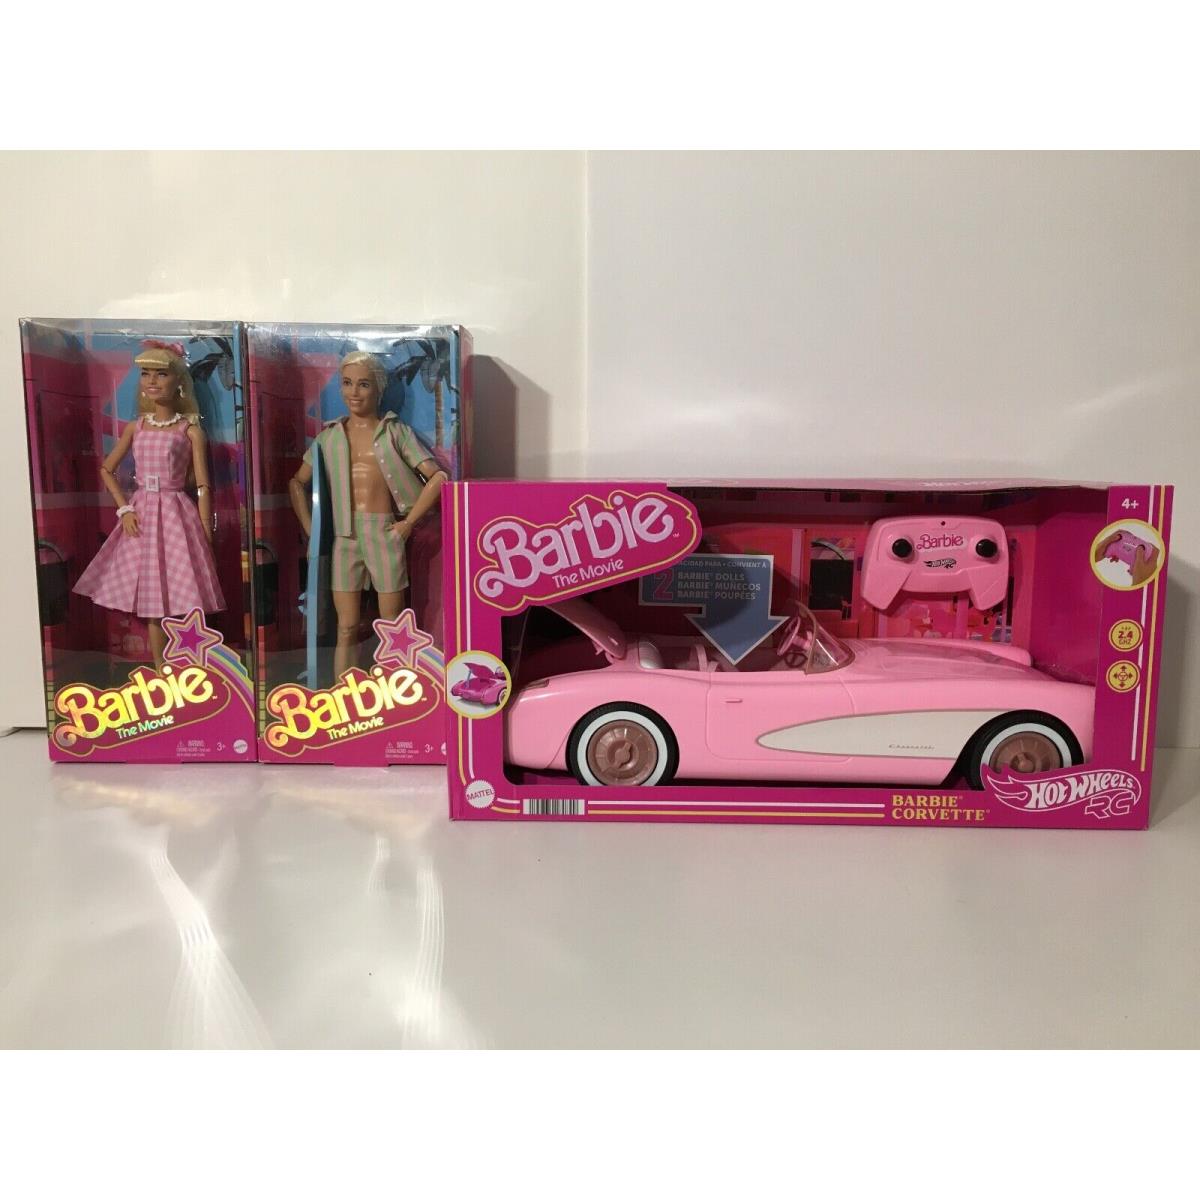 Barbie Movie Barbie Gingham Beach Ken Pink Corvette 3 Items Lot Mint Nrfb